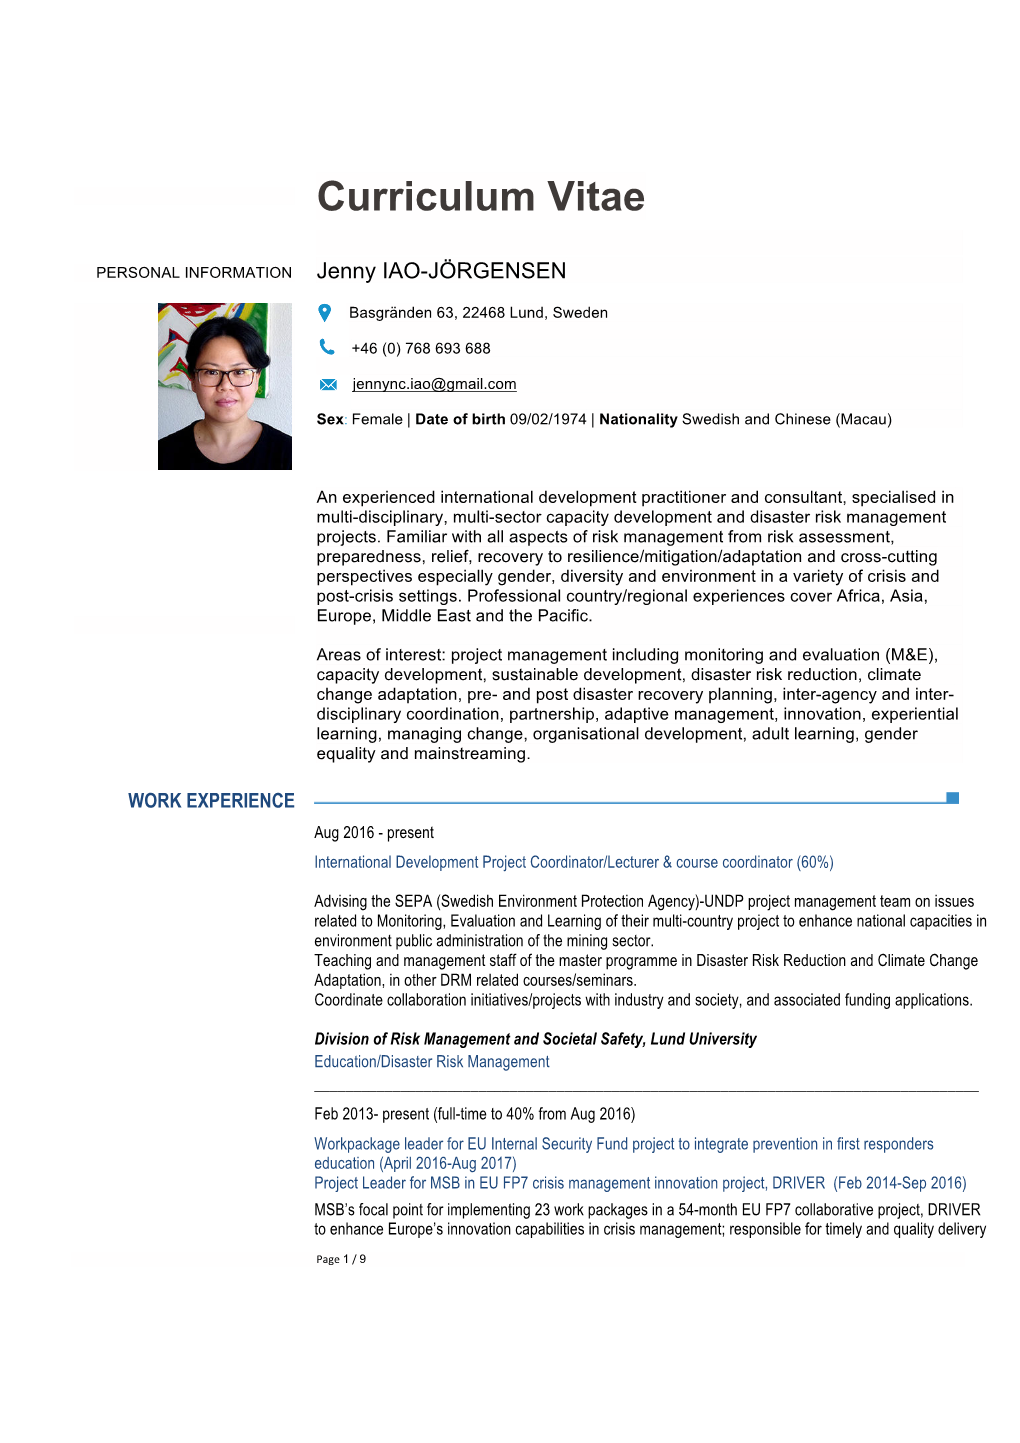 Jenny Iao-Jörgensen CV and Publication List